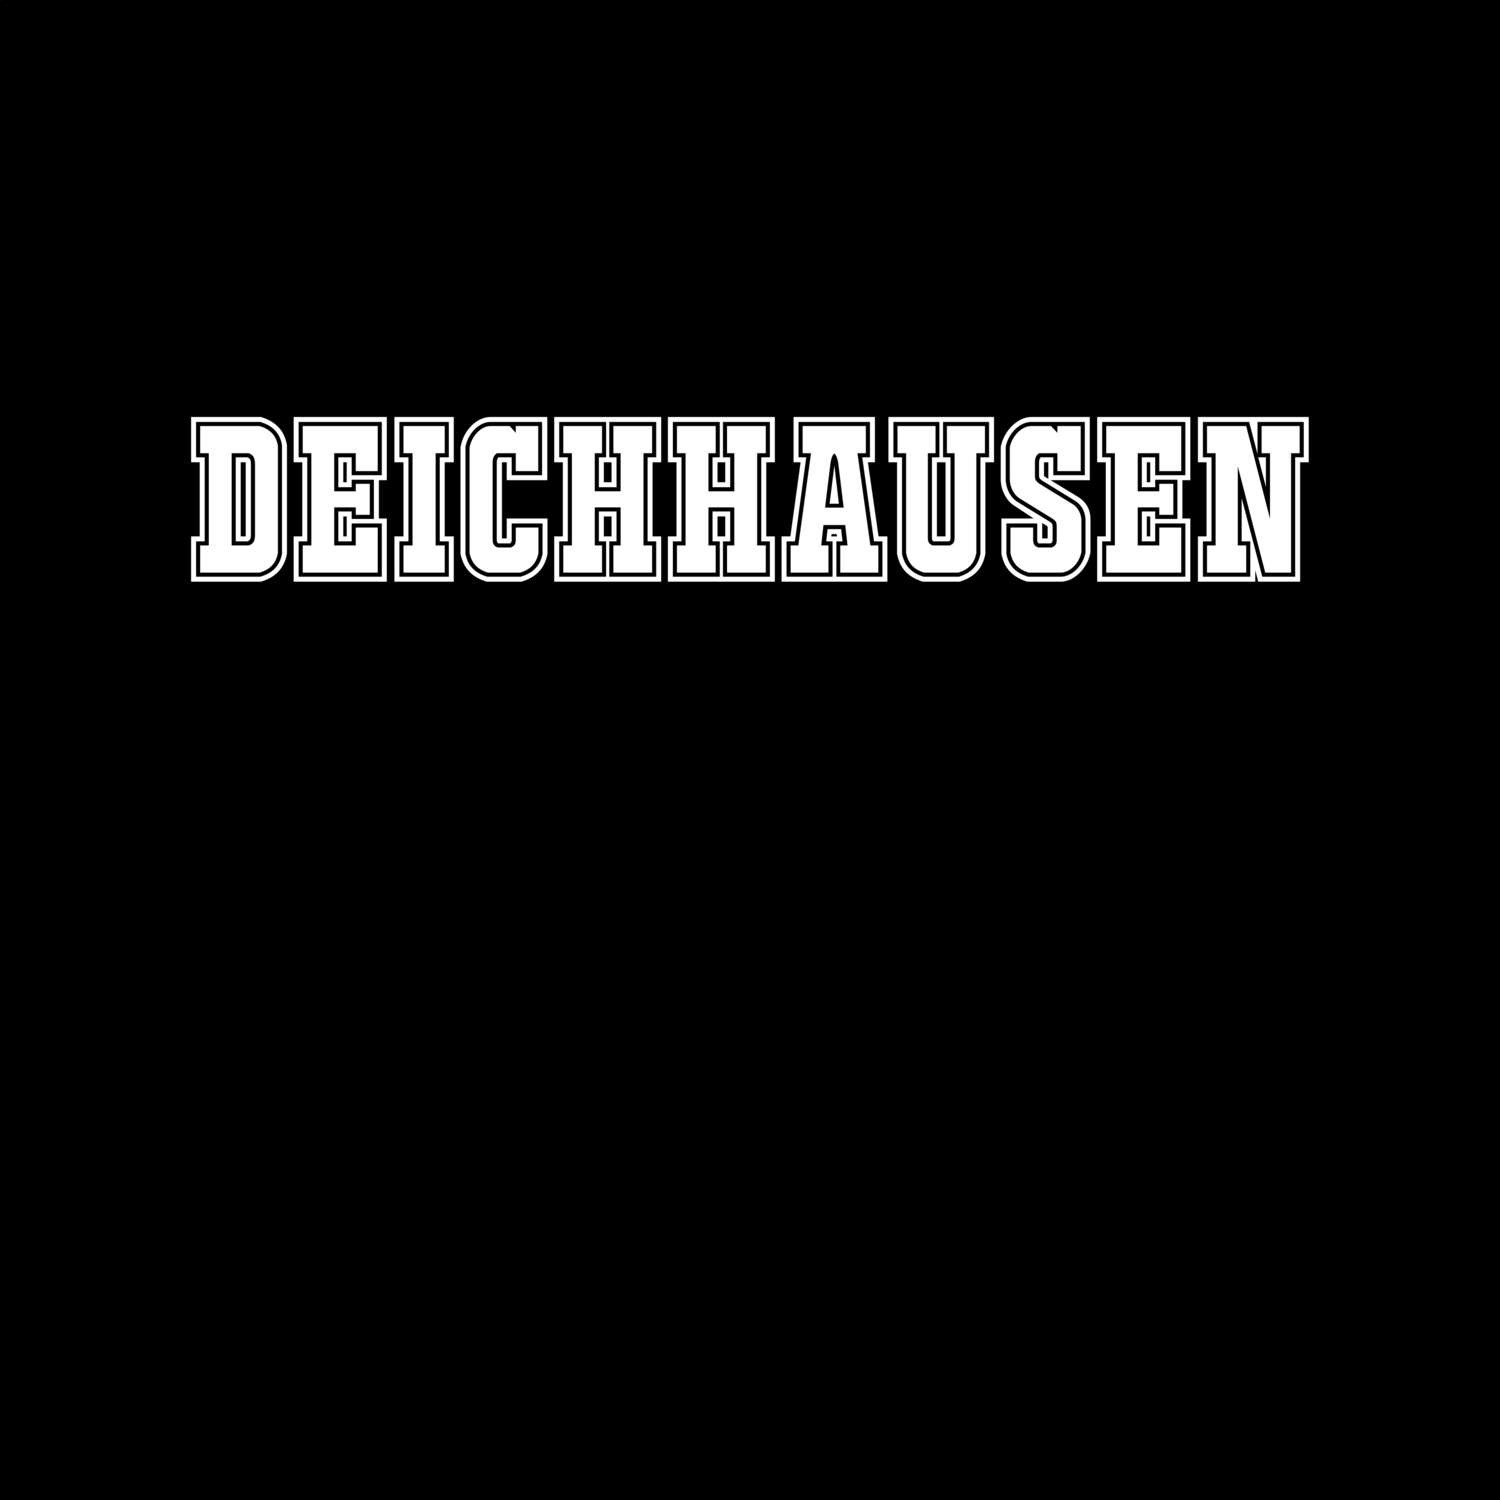 Deichhausen T-Shirt »Classic«